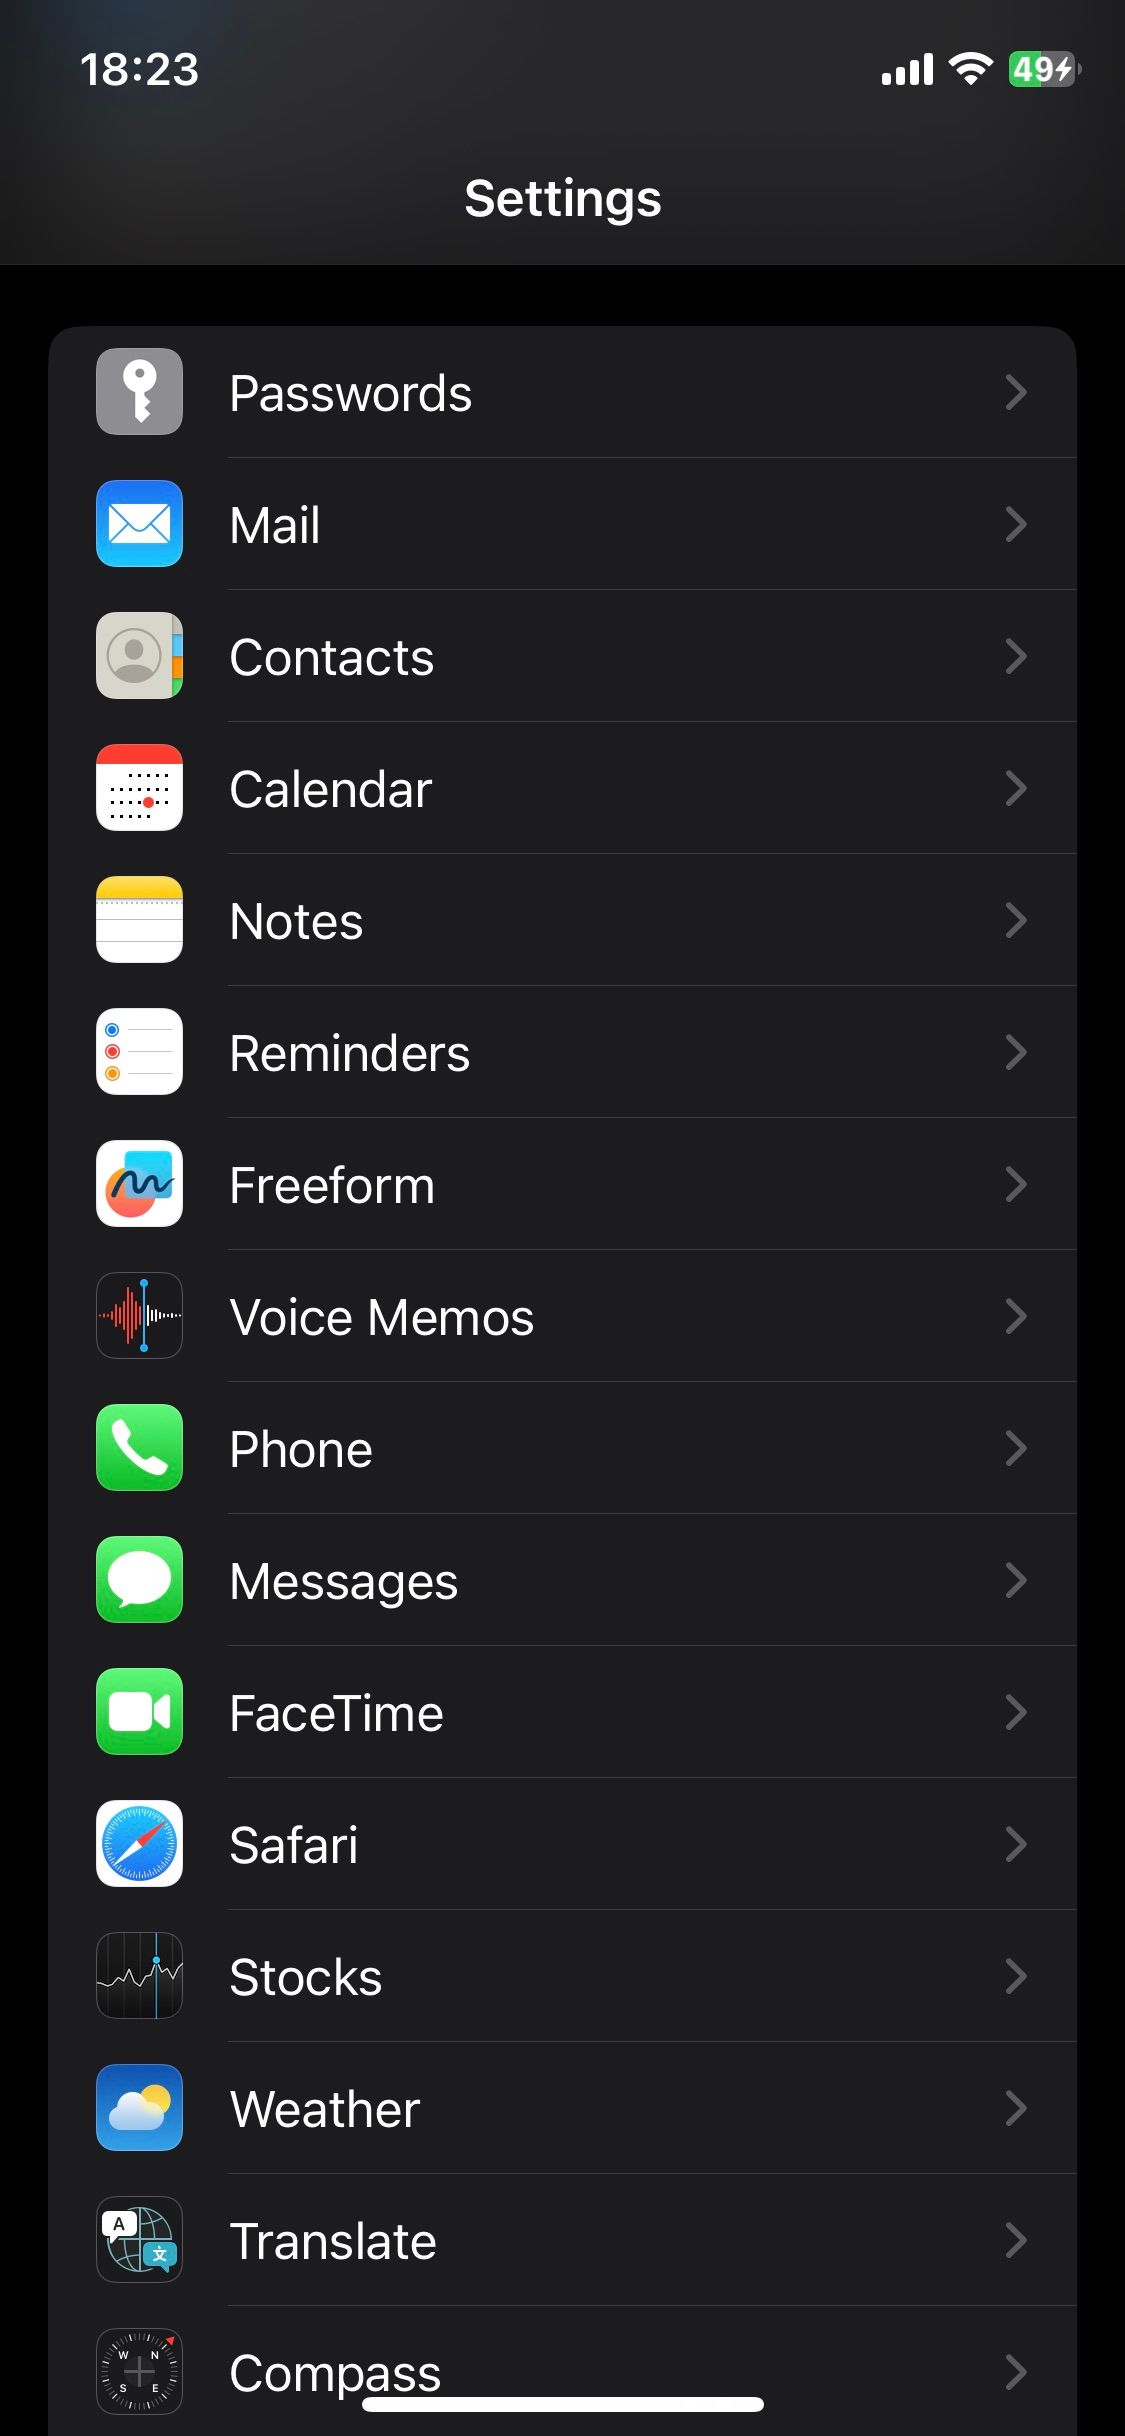 Settings menu on iOS